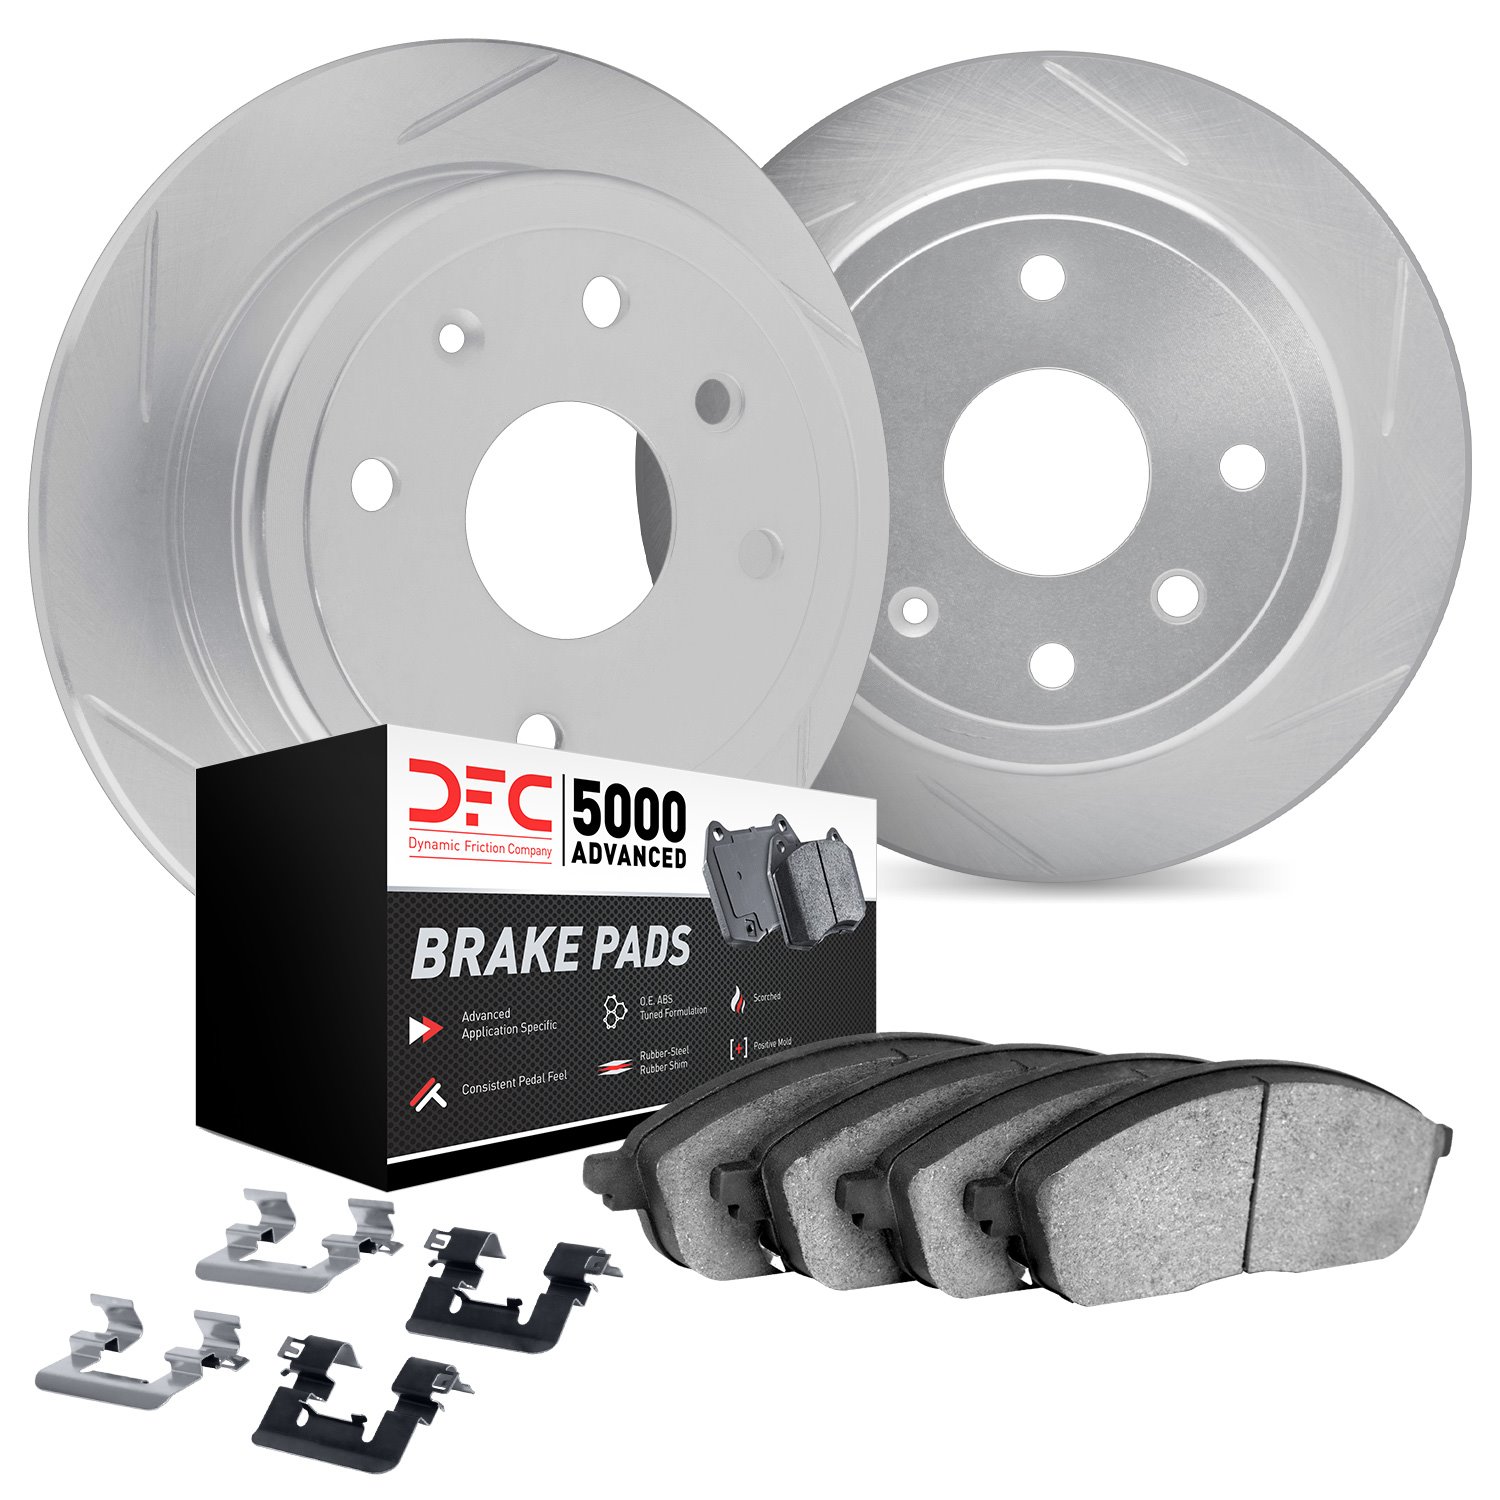 5512-80087 Slotted Brake Rotors w/5000 Advanced Brake Pads Kit & Hardware [Silver], Fits Select Ford/Lincoln/Mercury/Mazda, Posi